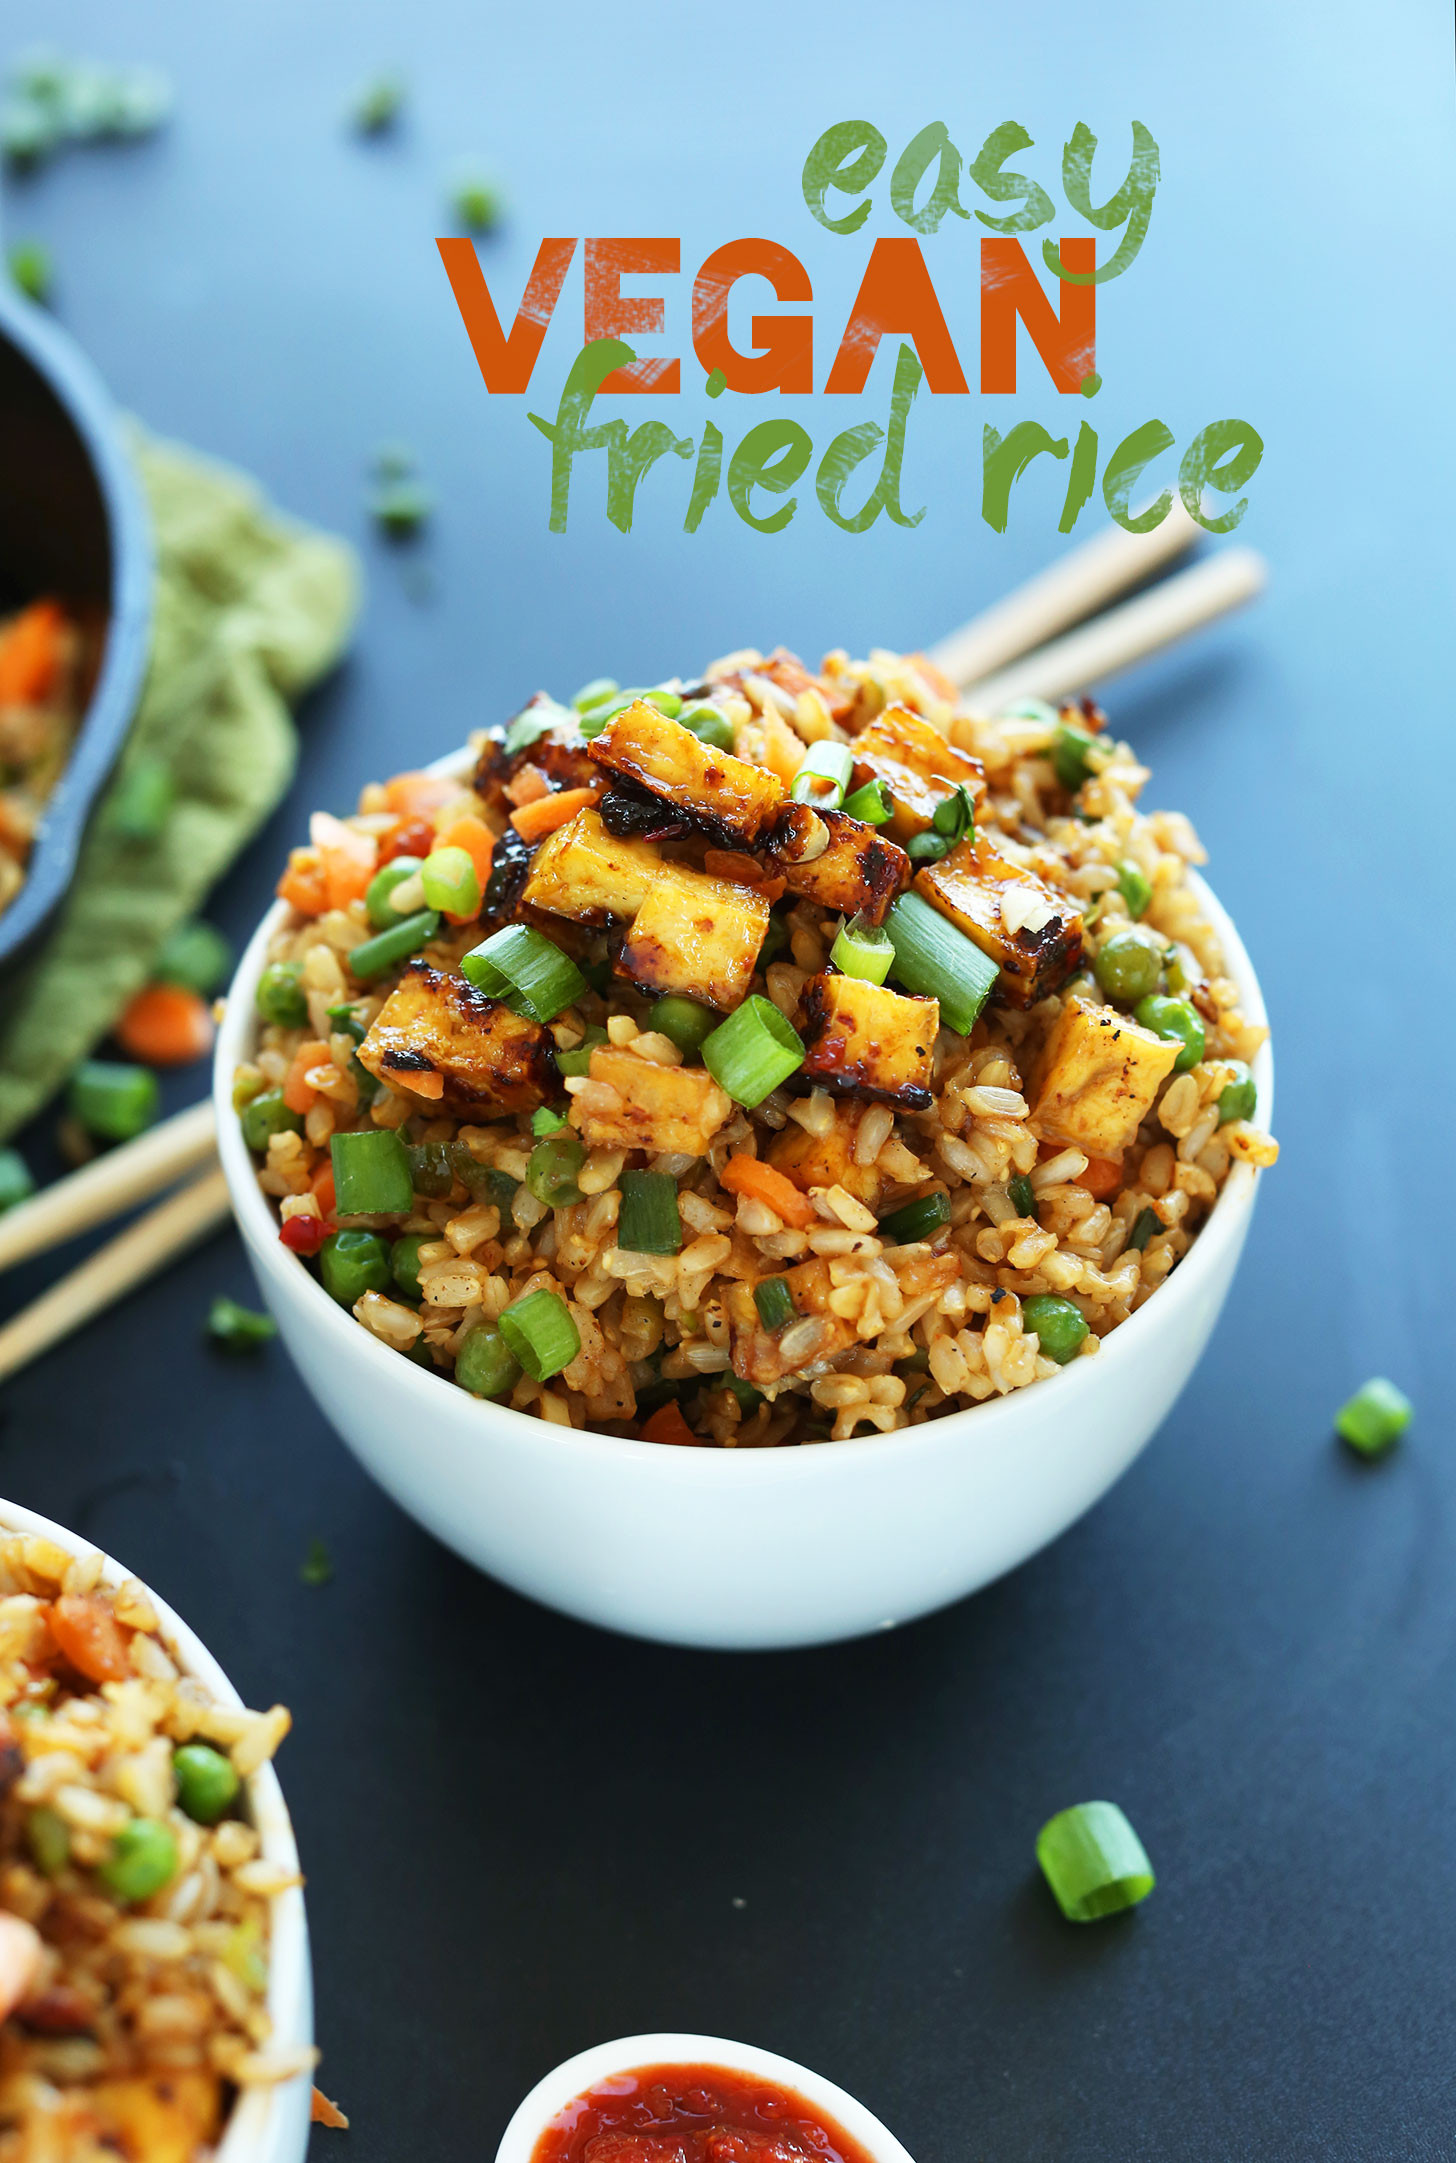 Asian Vegan Recipes
 Vegan Fried Rice